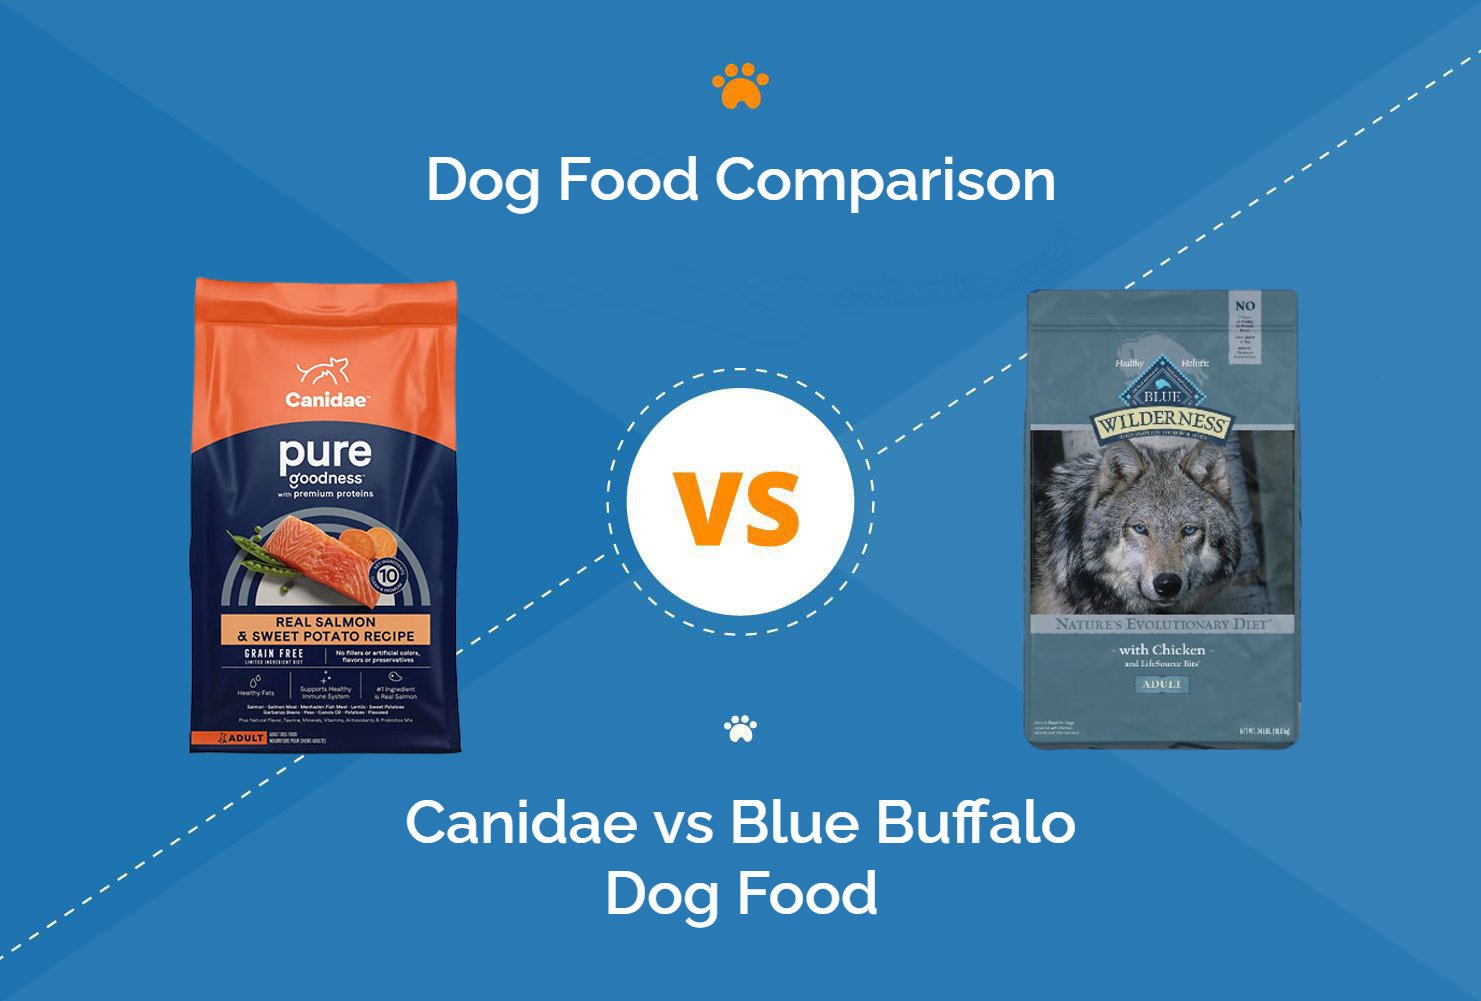 Canidae vs. Blue Buffalo Dog Food